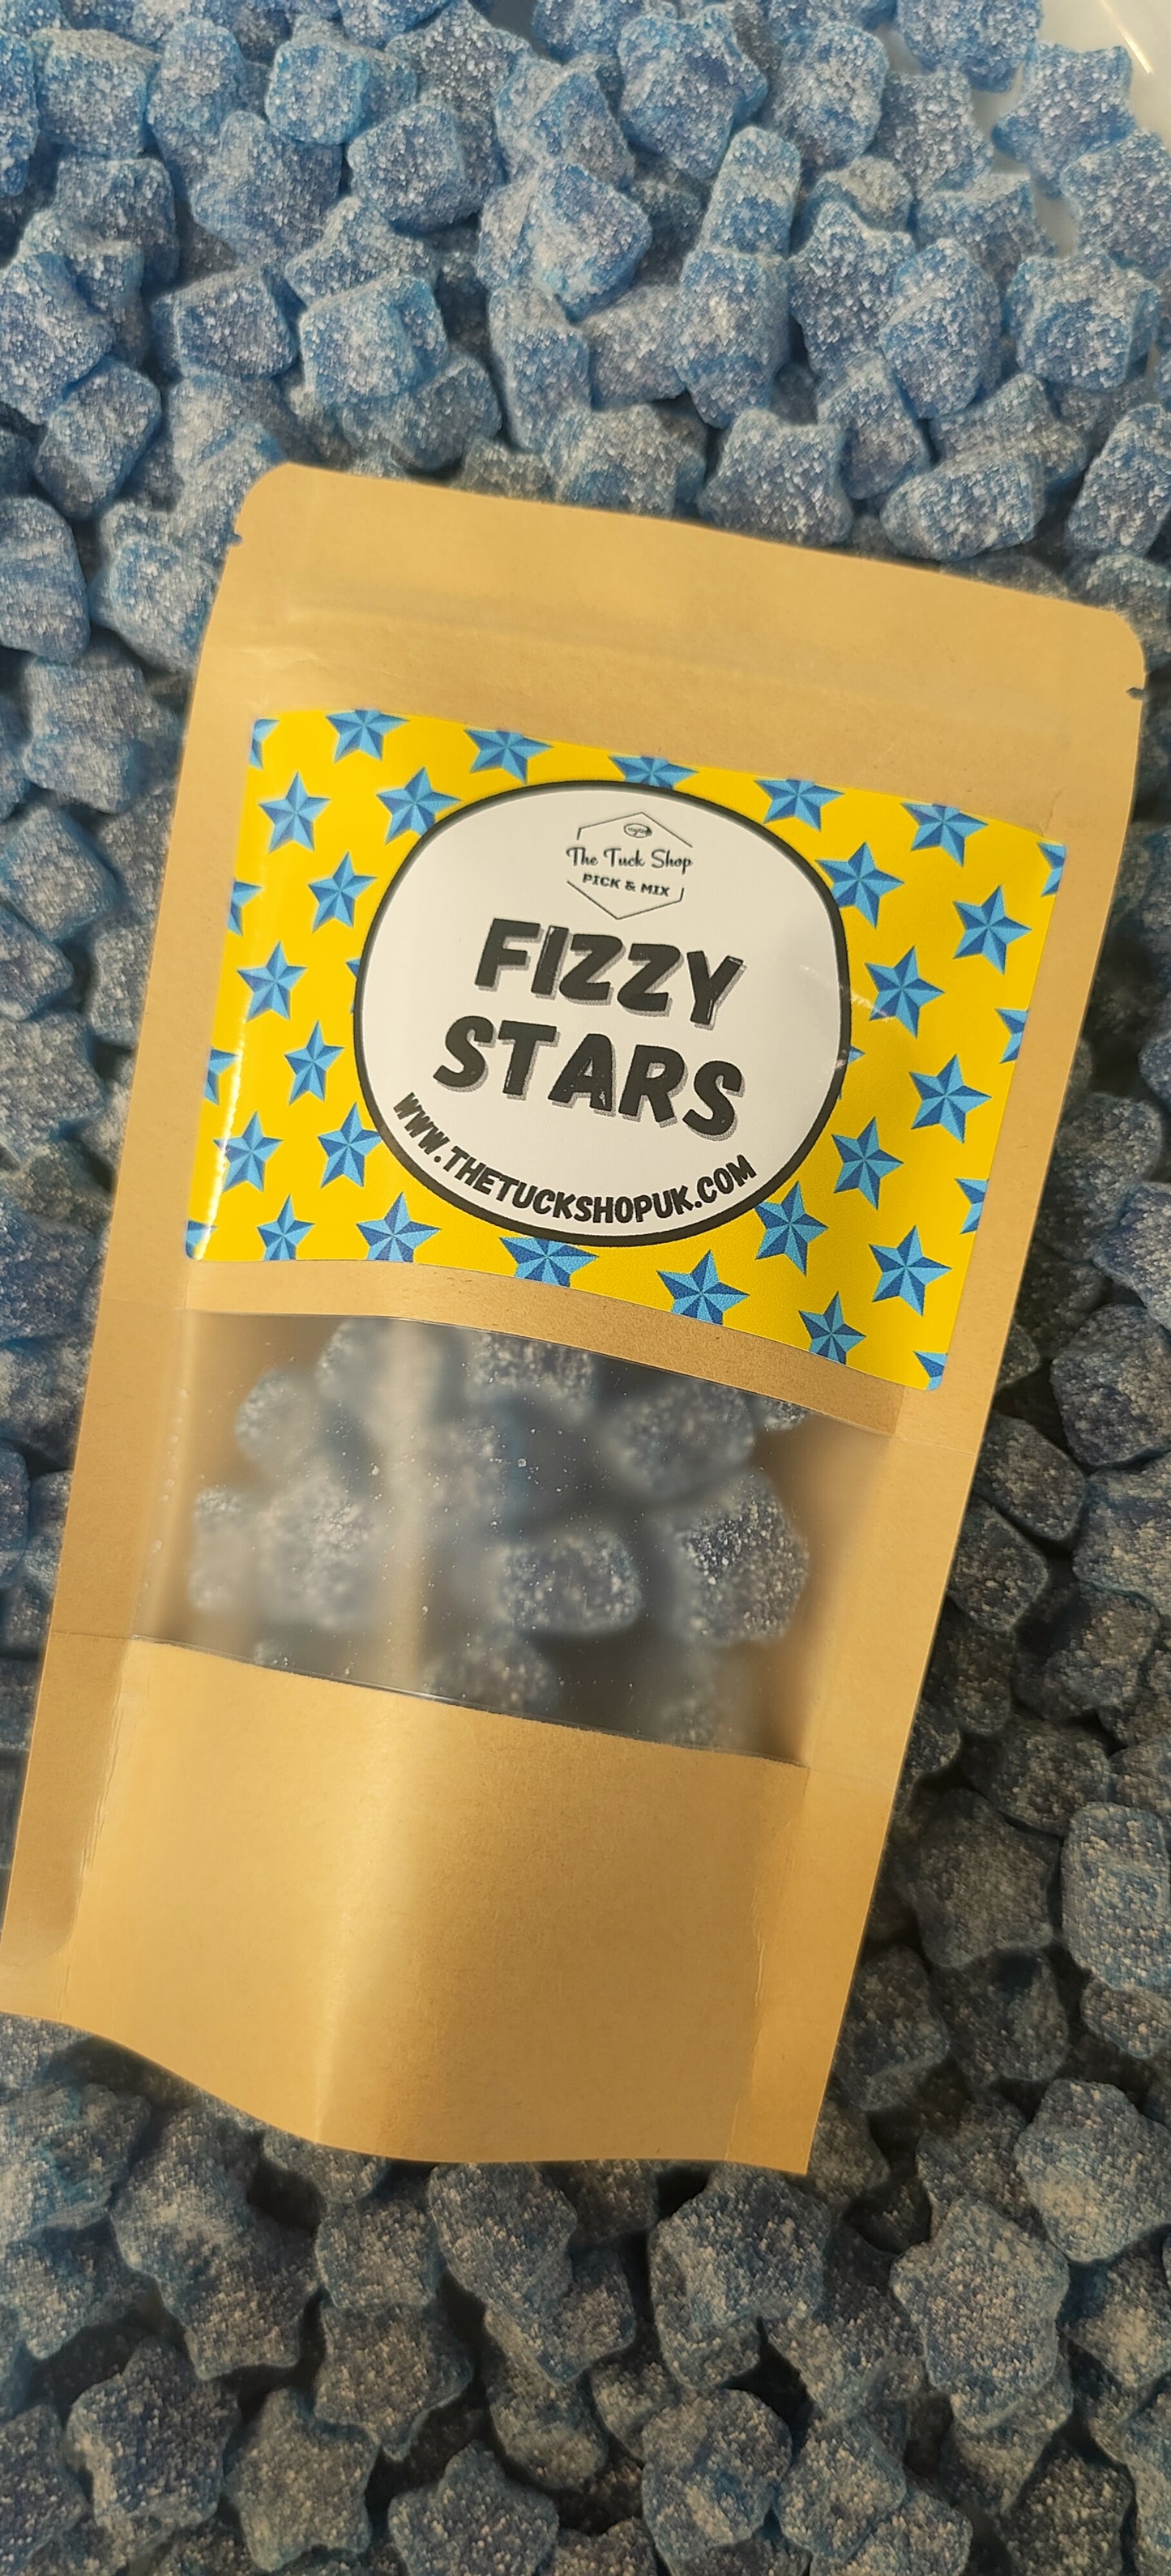 Fizzy Stars 200g